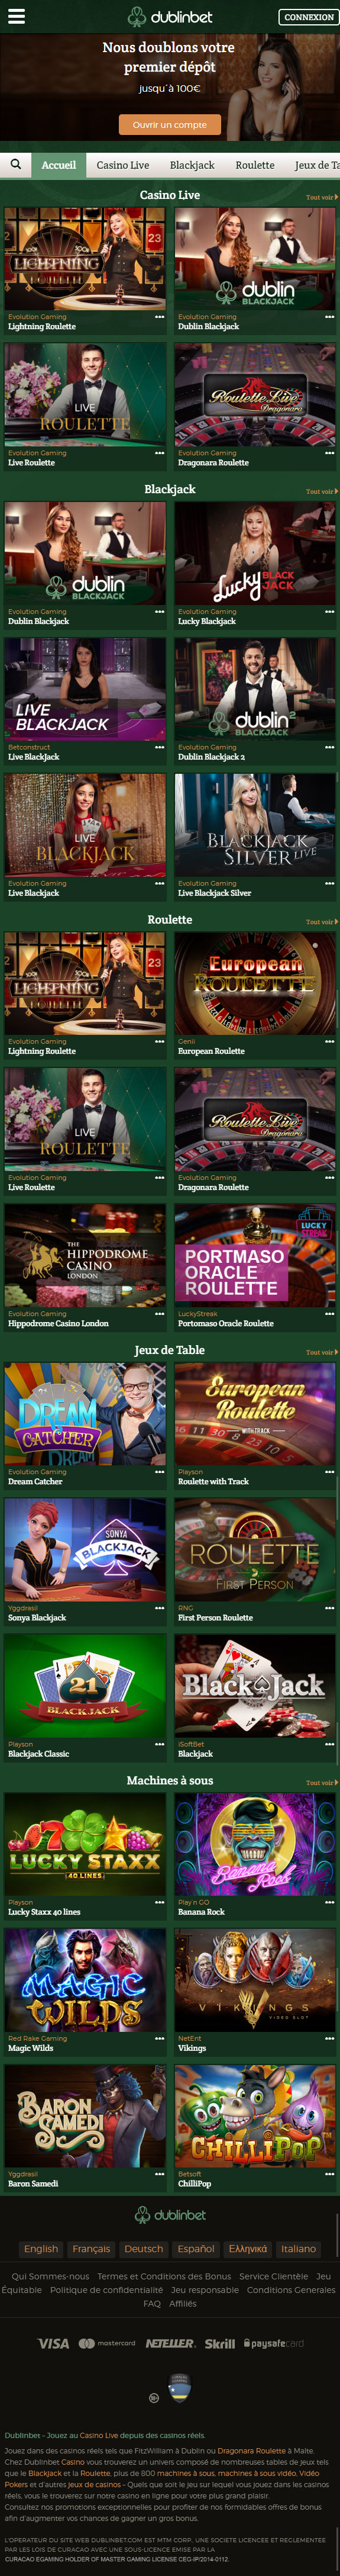 avis Casino Live dublinbet France